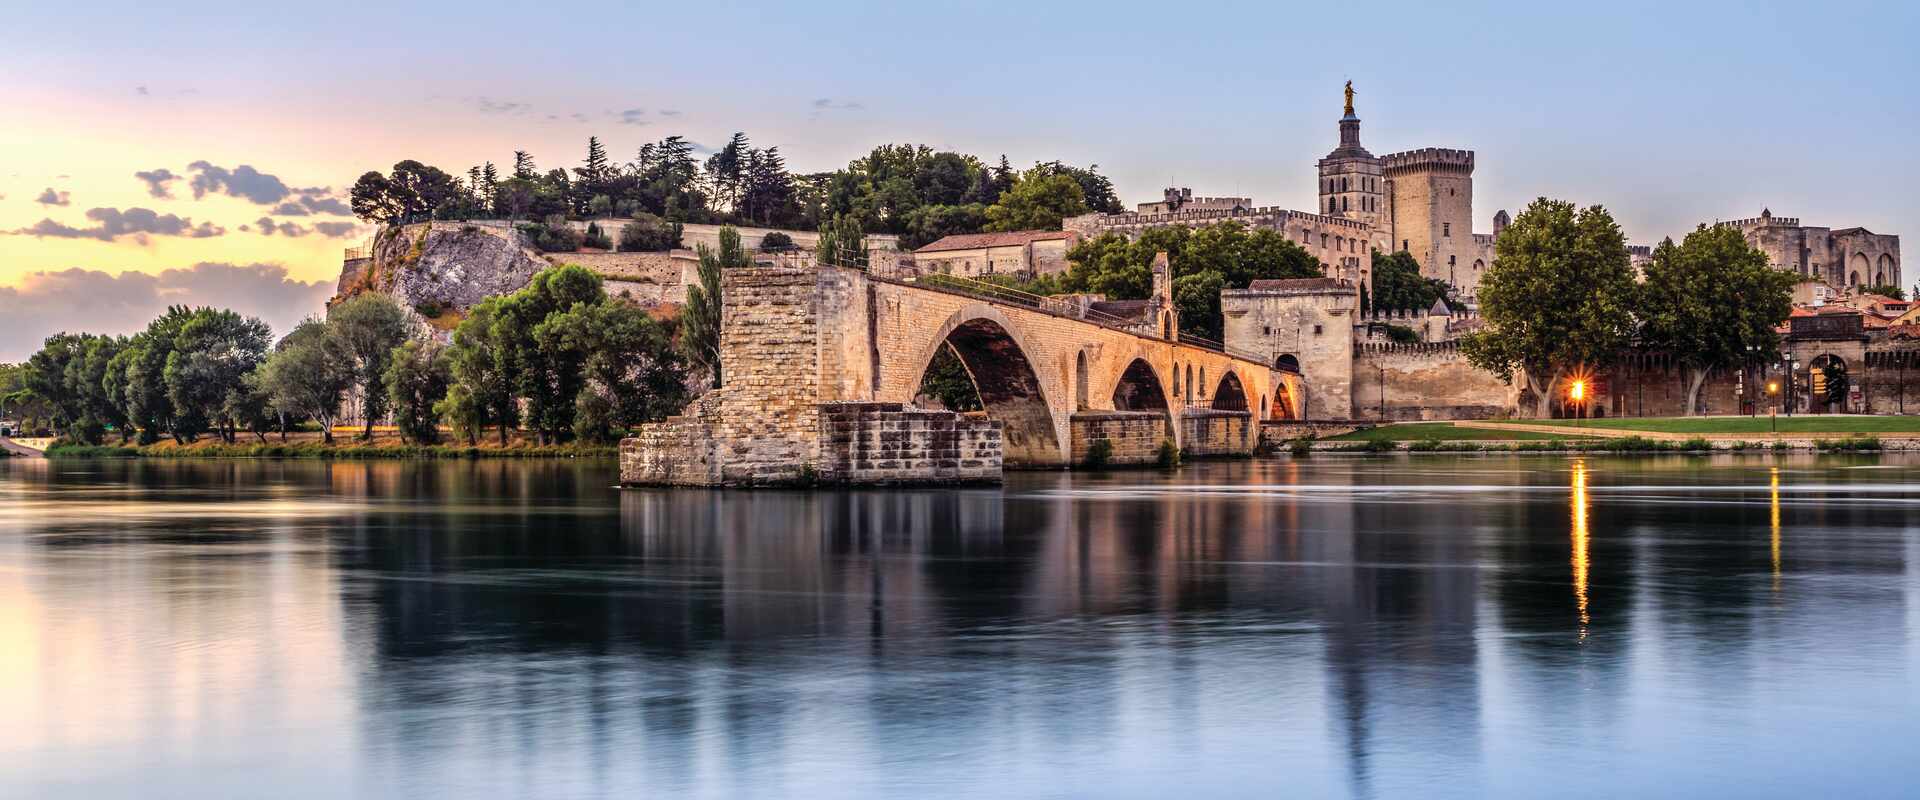 The Rhone River passing through Avignon, France